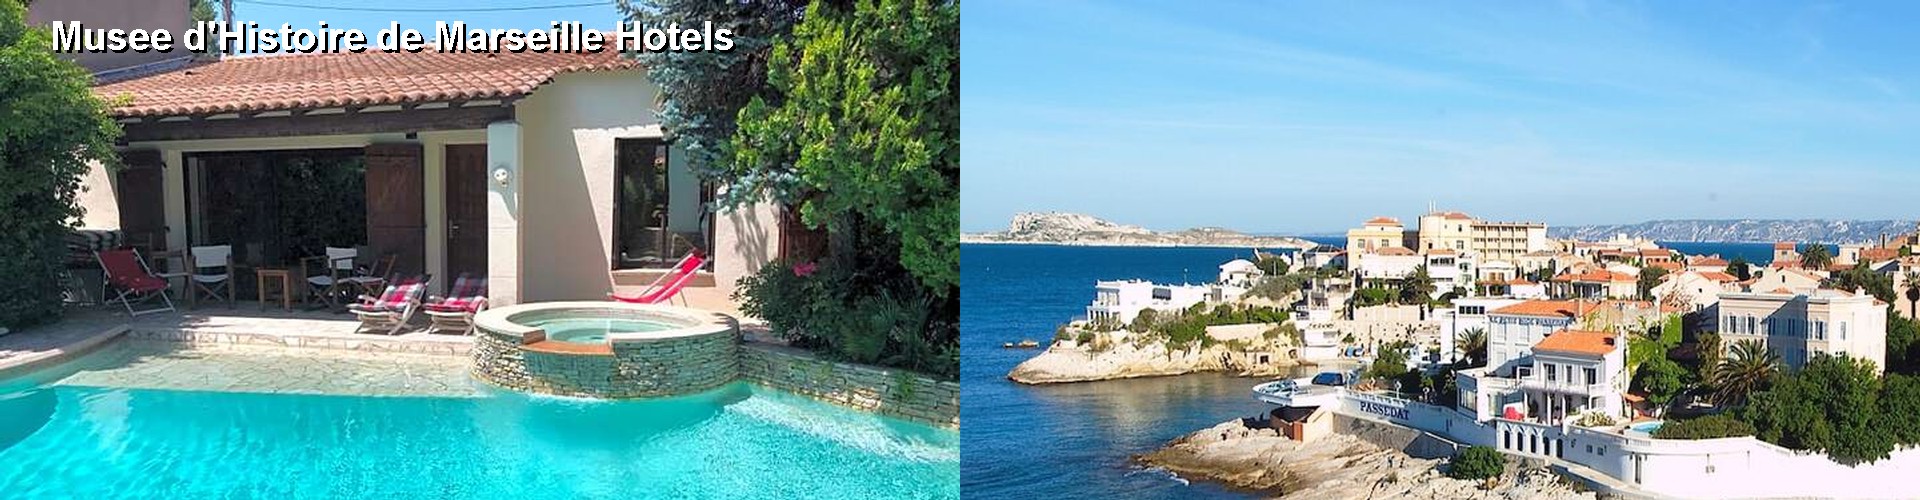 5 Best Hotels near Musee d'Histoire de Marseille